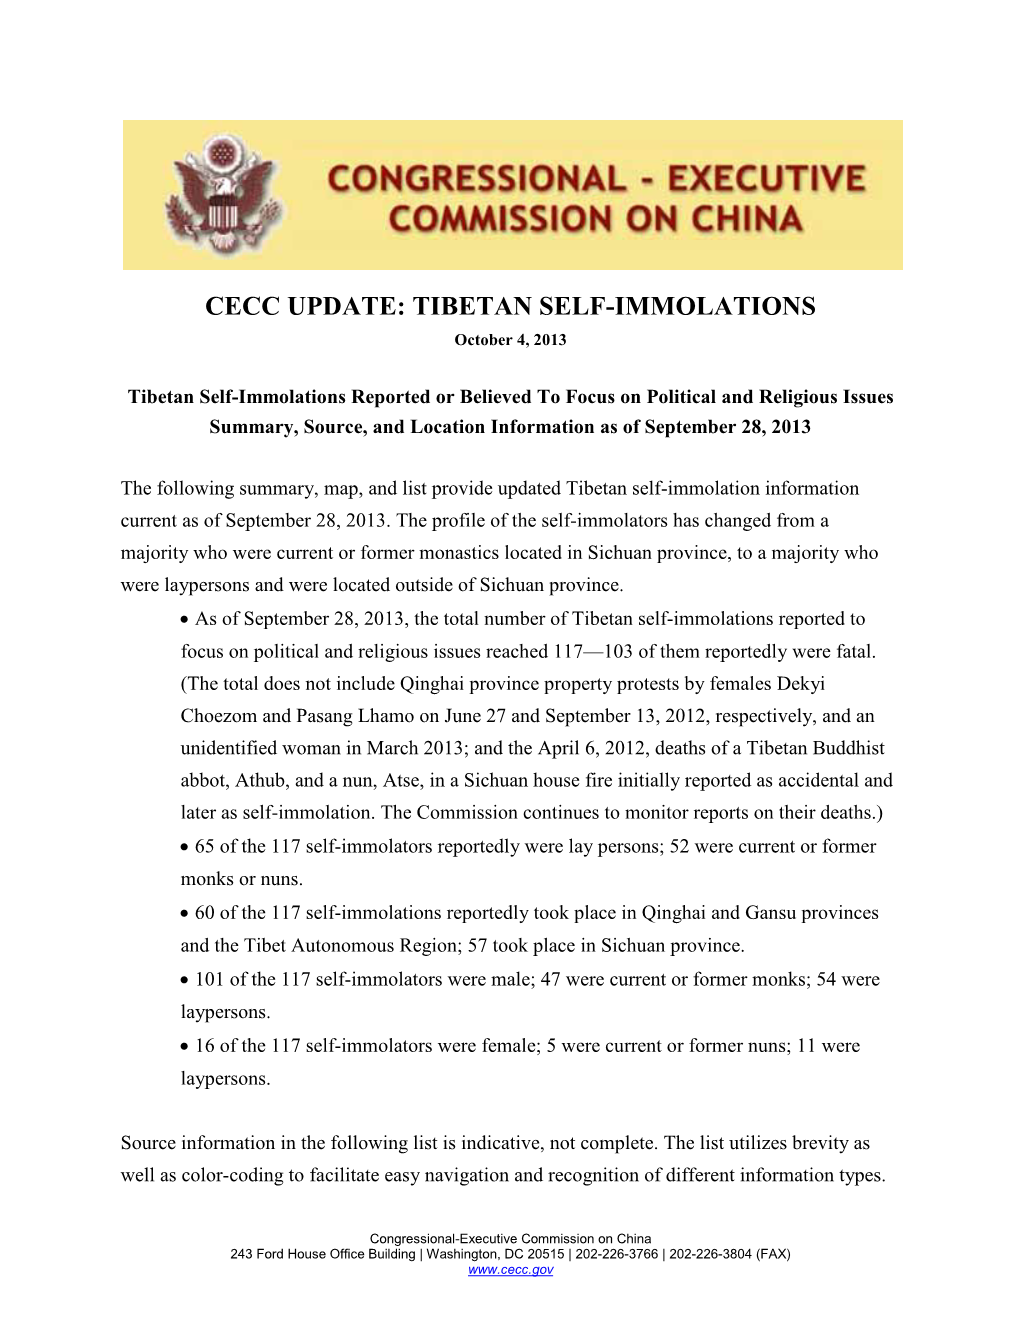 TIBETAN SELF-IMMOLATIONS October 4, 2013